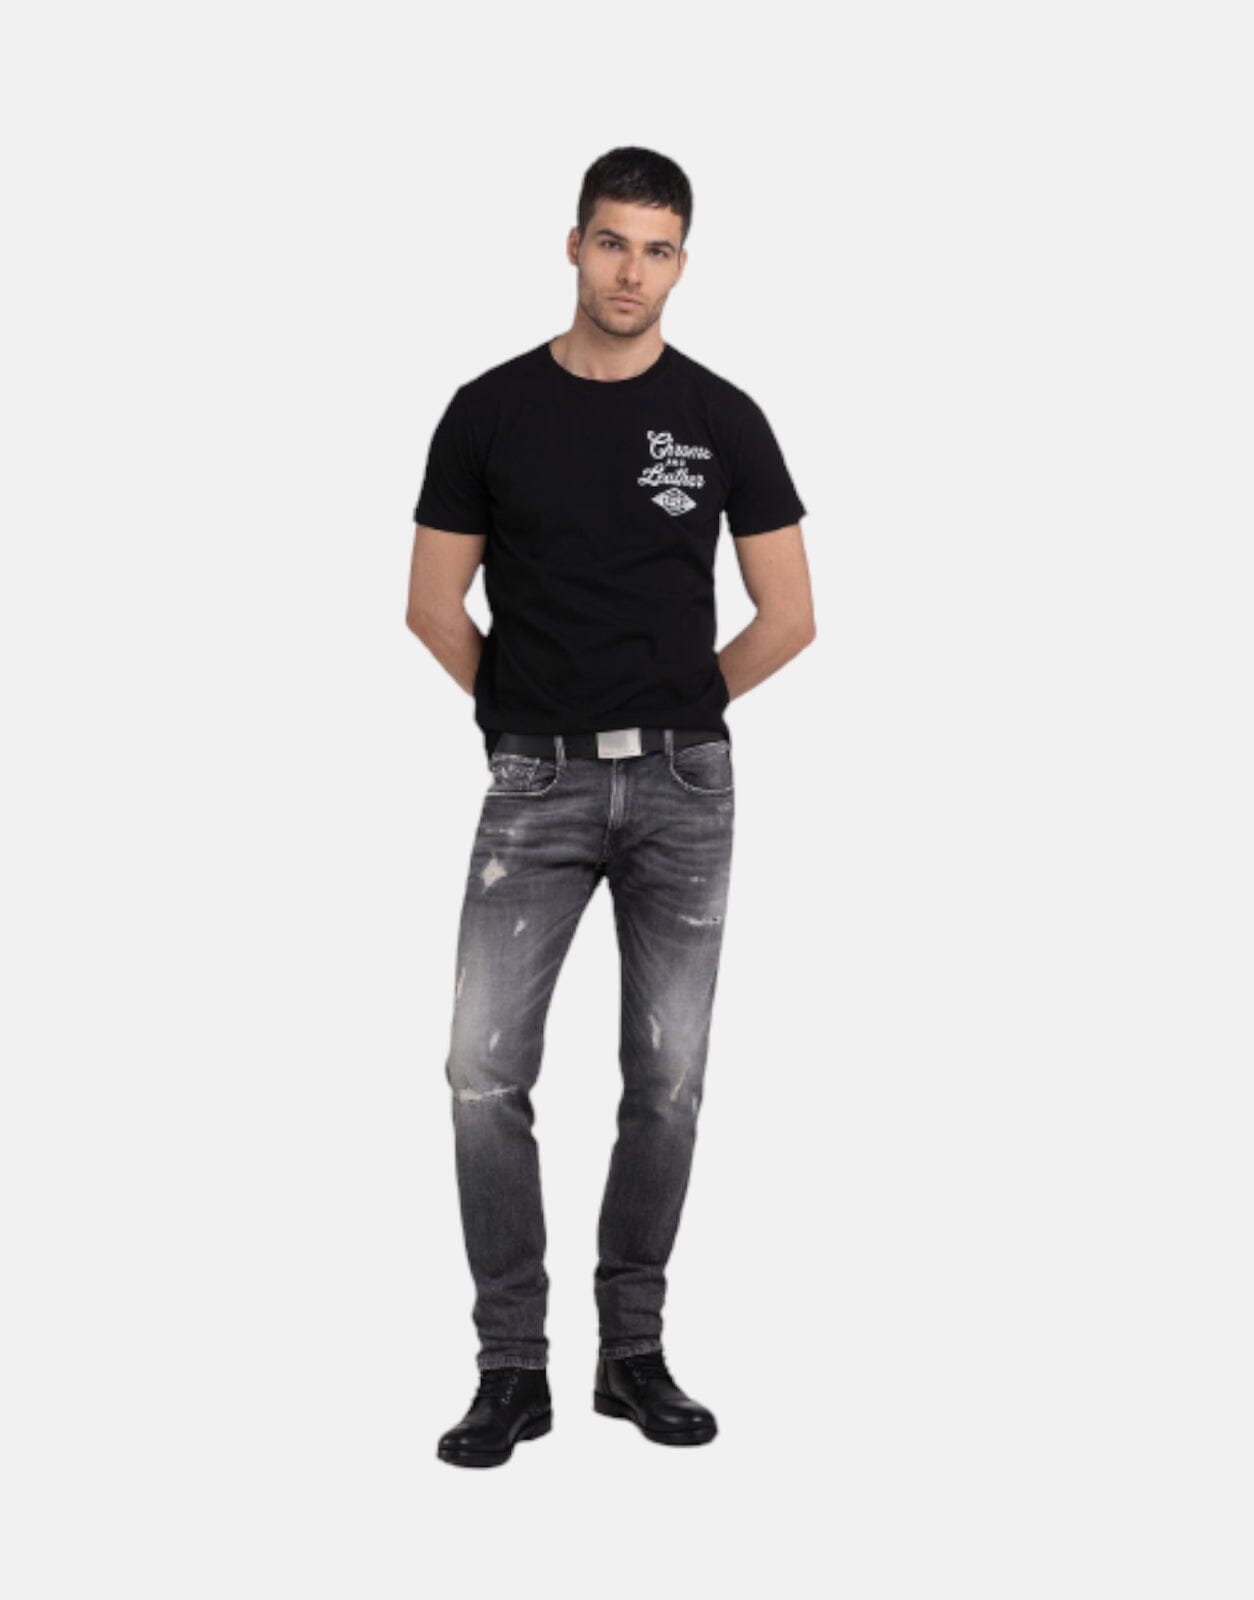 Replay Chrome Leather Print T-Shirt - Subwear